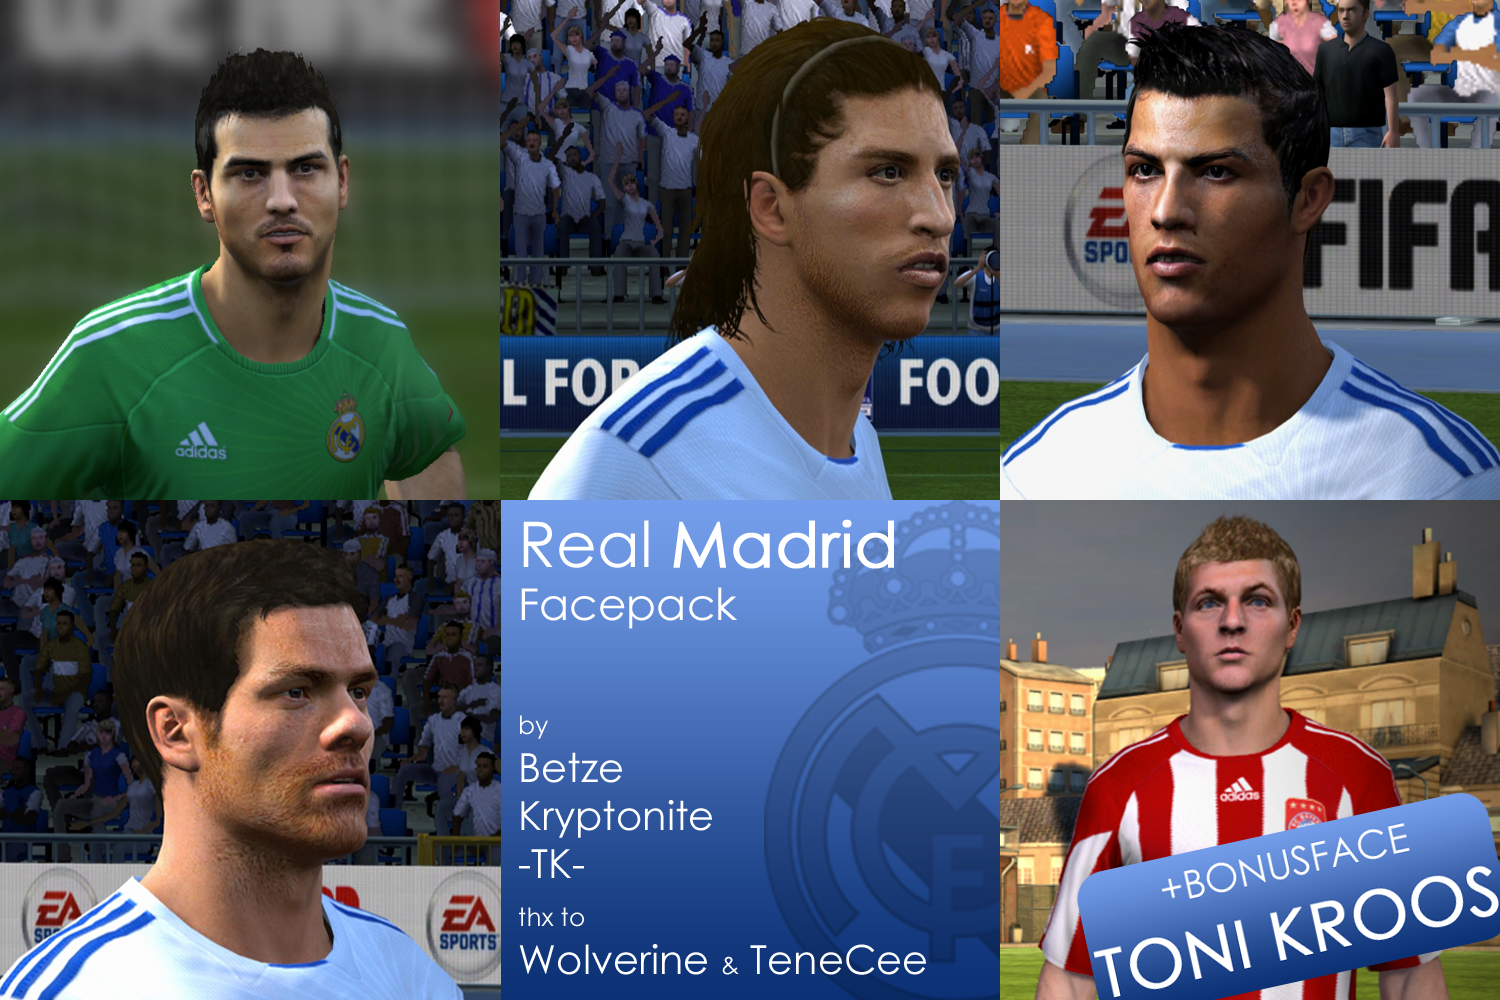 Real Madrid Facepack